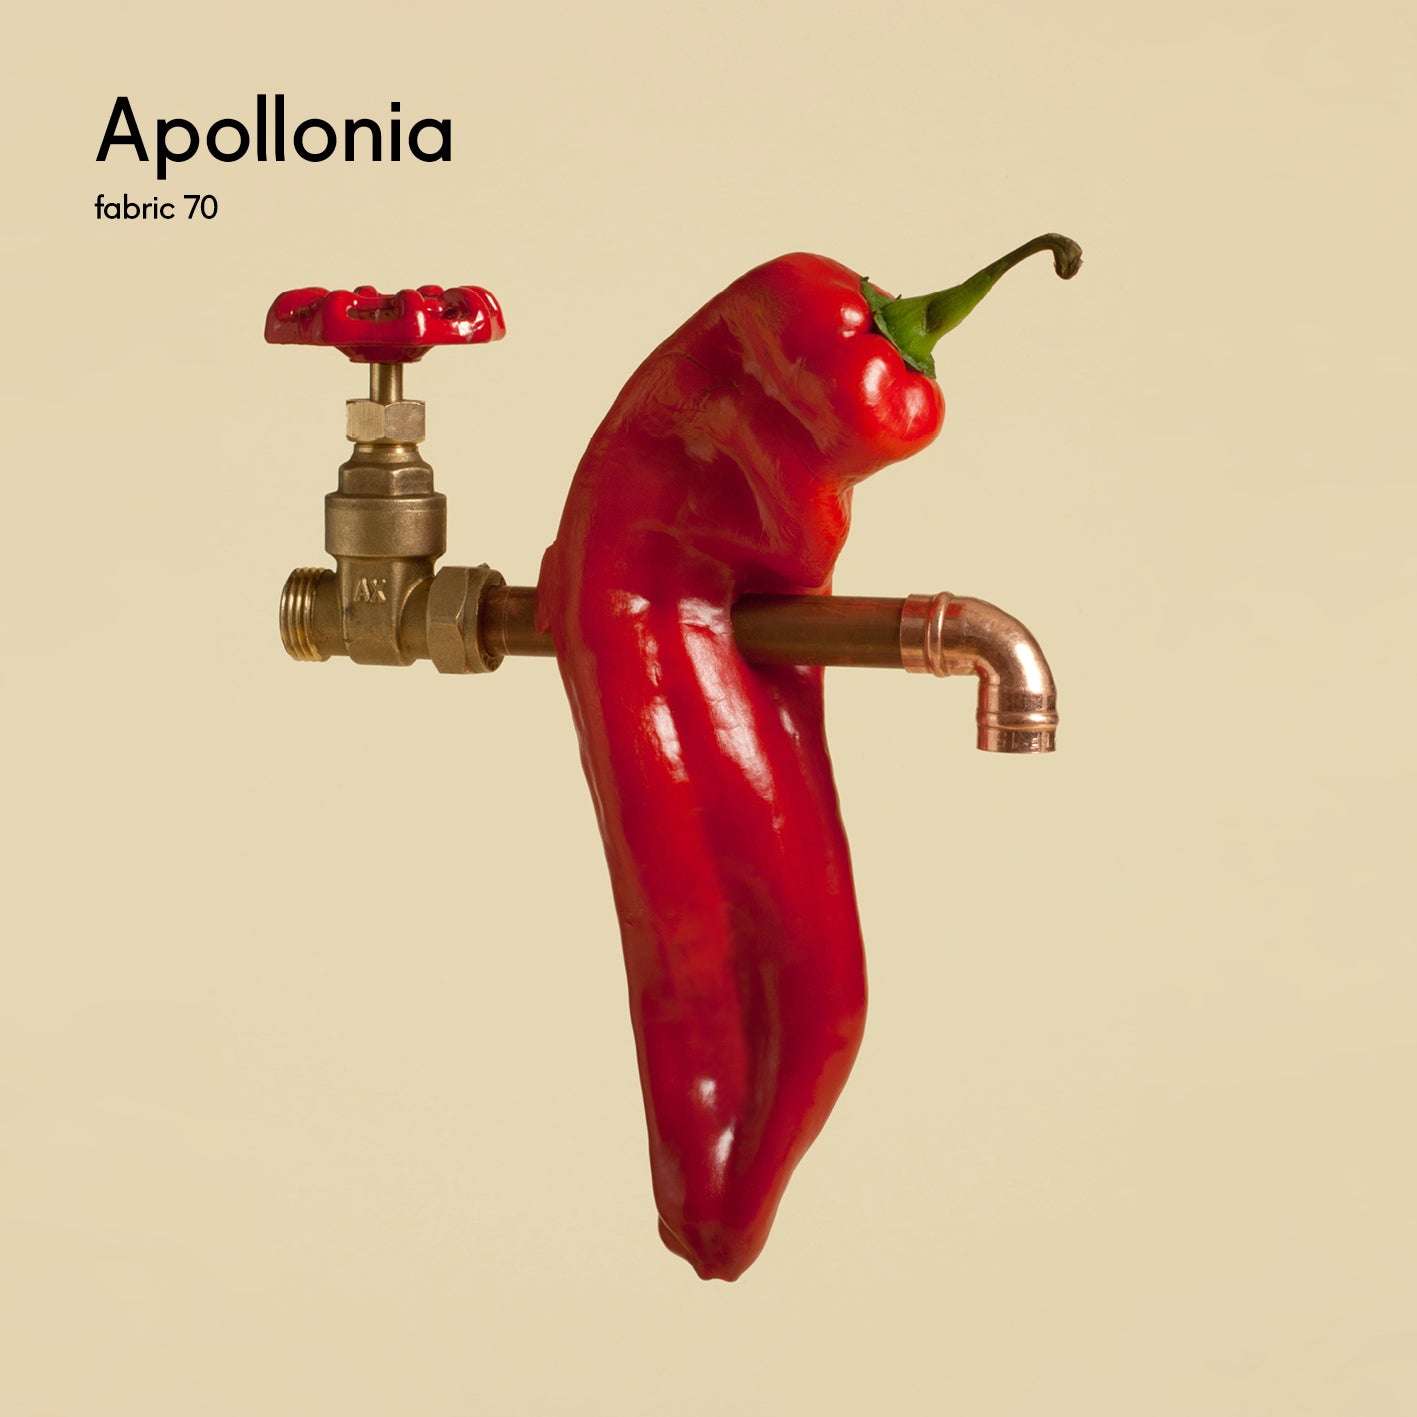 Apollonia - fabric 70